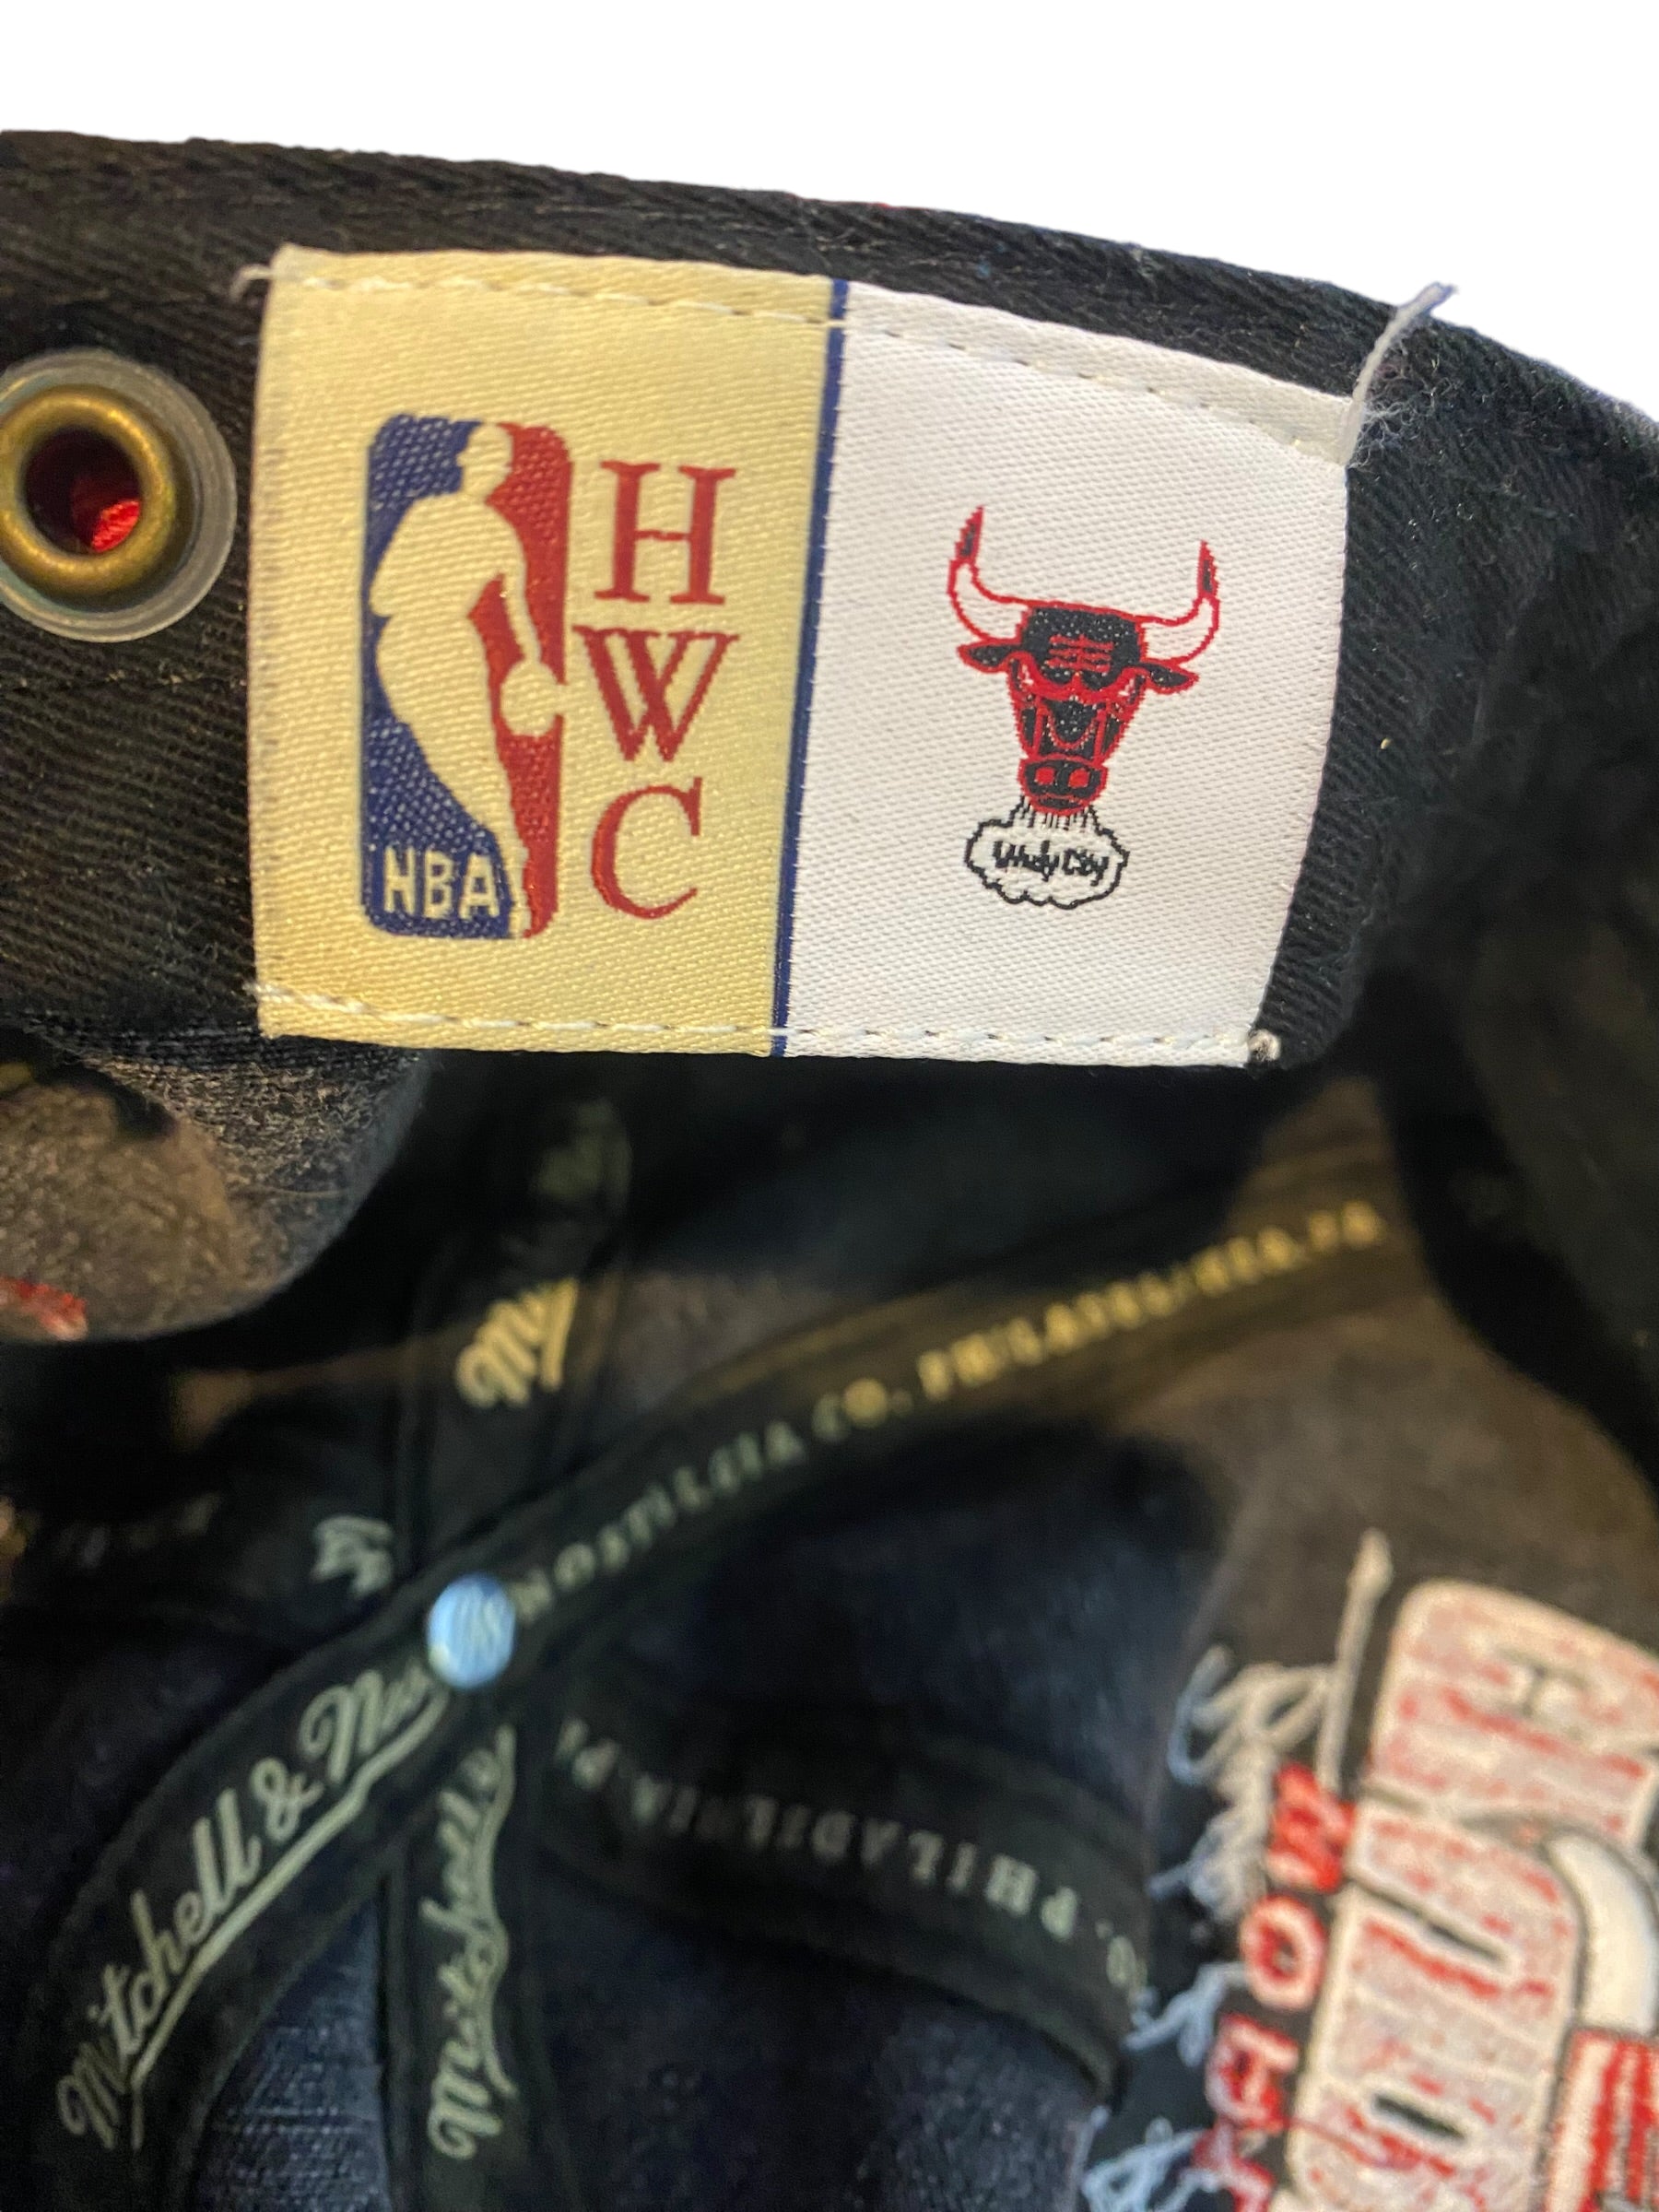 Mitchell & Ness Vintage Chicago Bulls Back To Back World Champions 91' 92 Hat black denim - Altezahan